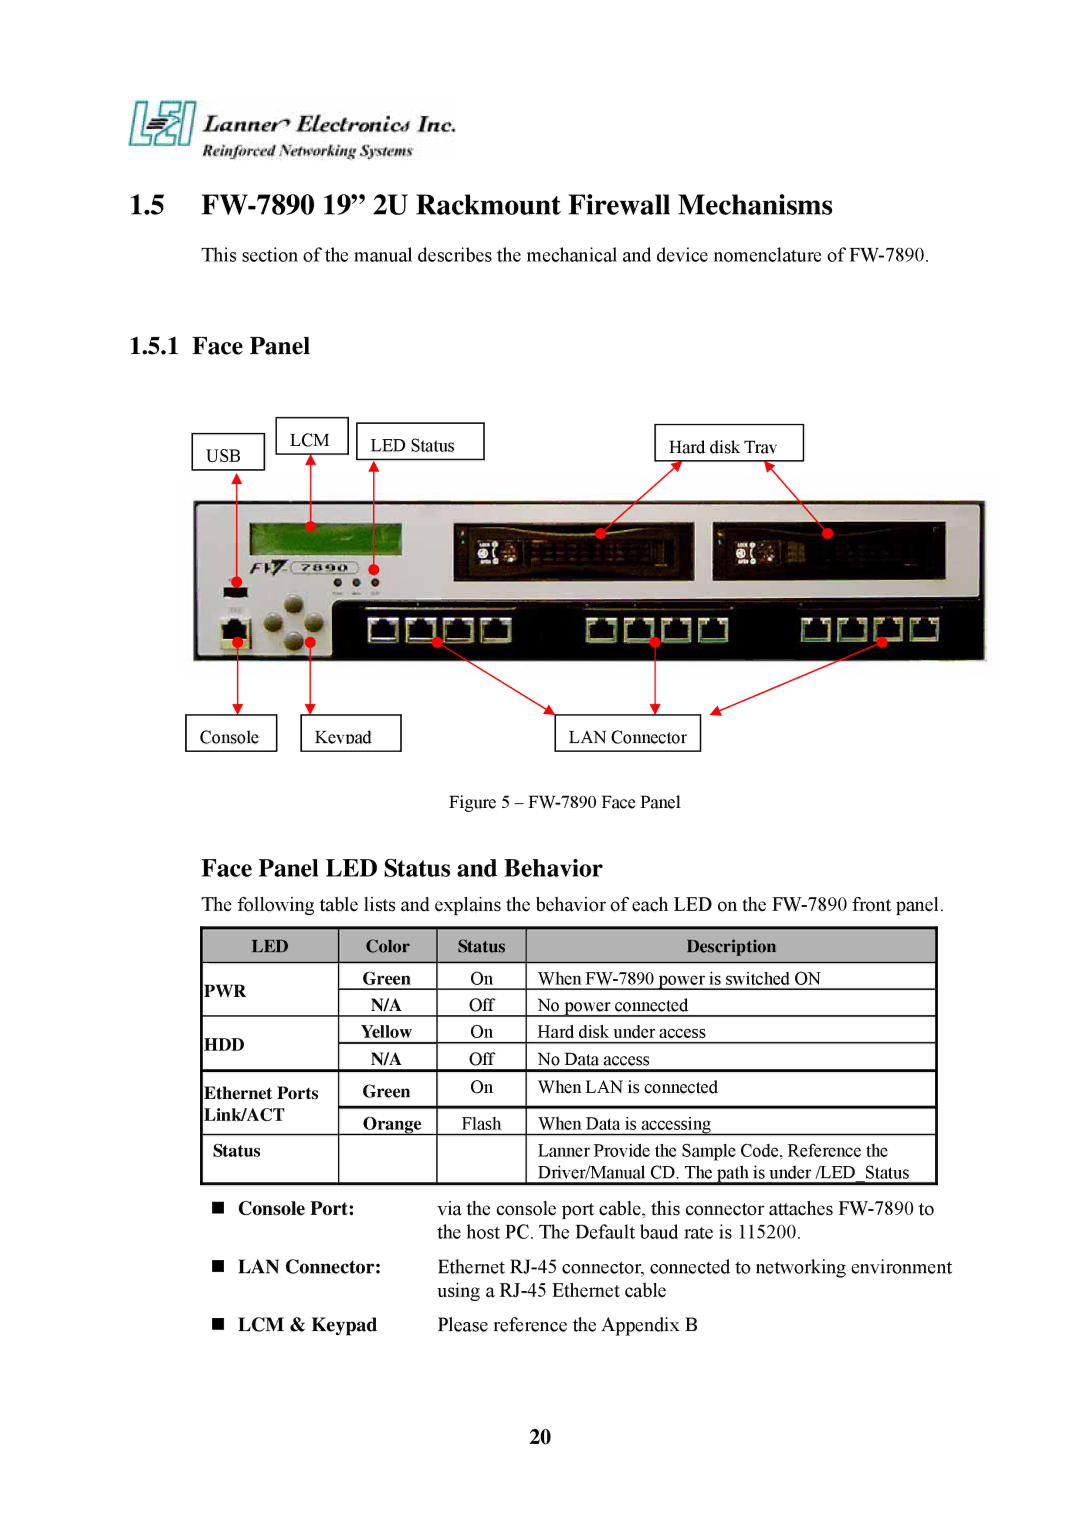 Lanner electronic user manual FW-7890 19 2U Rackmount Firewall Mechanisms, Face Panel LED Status and Behavior 